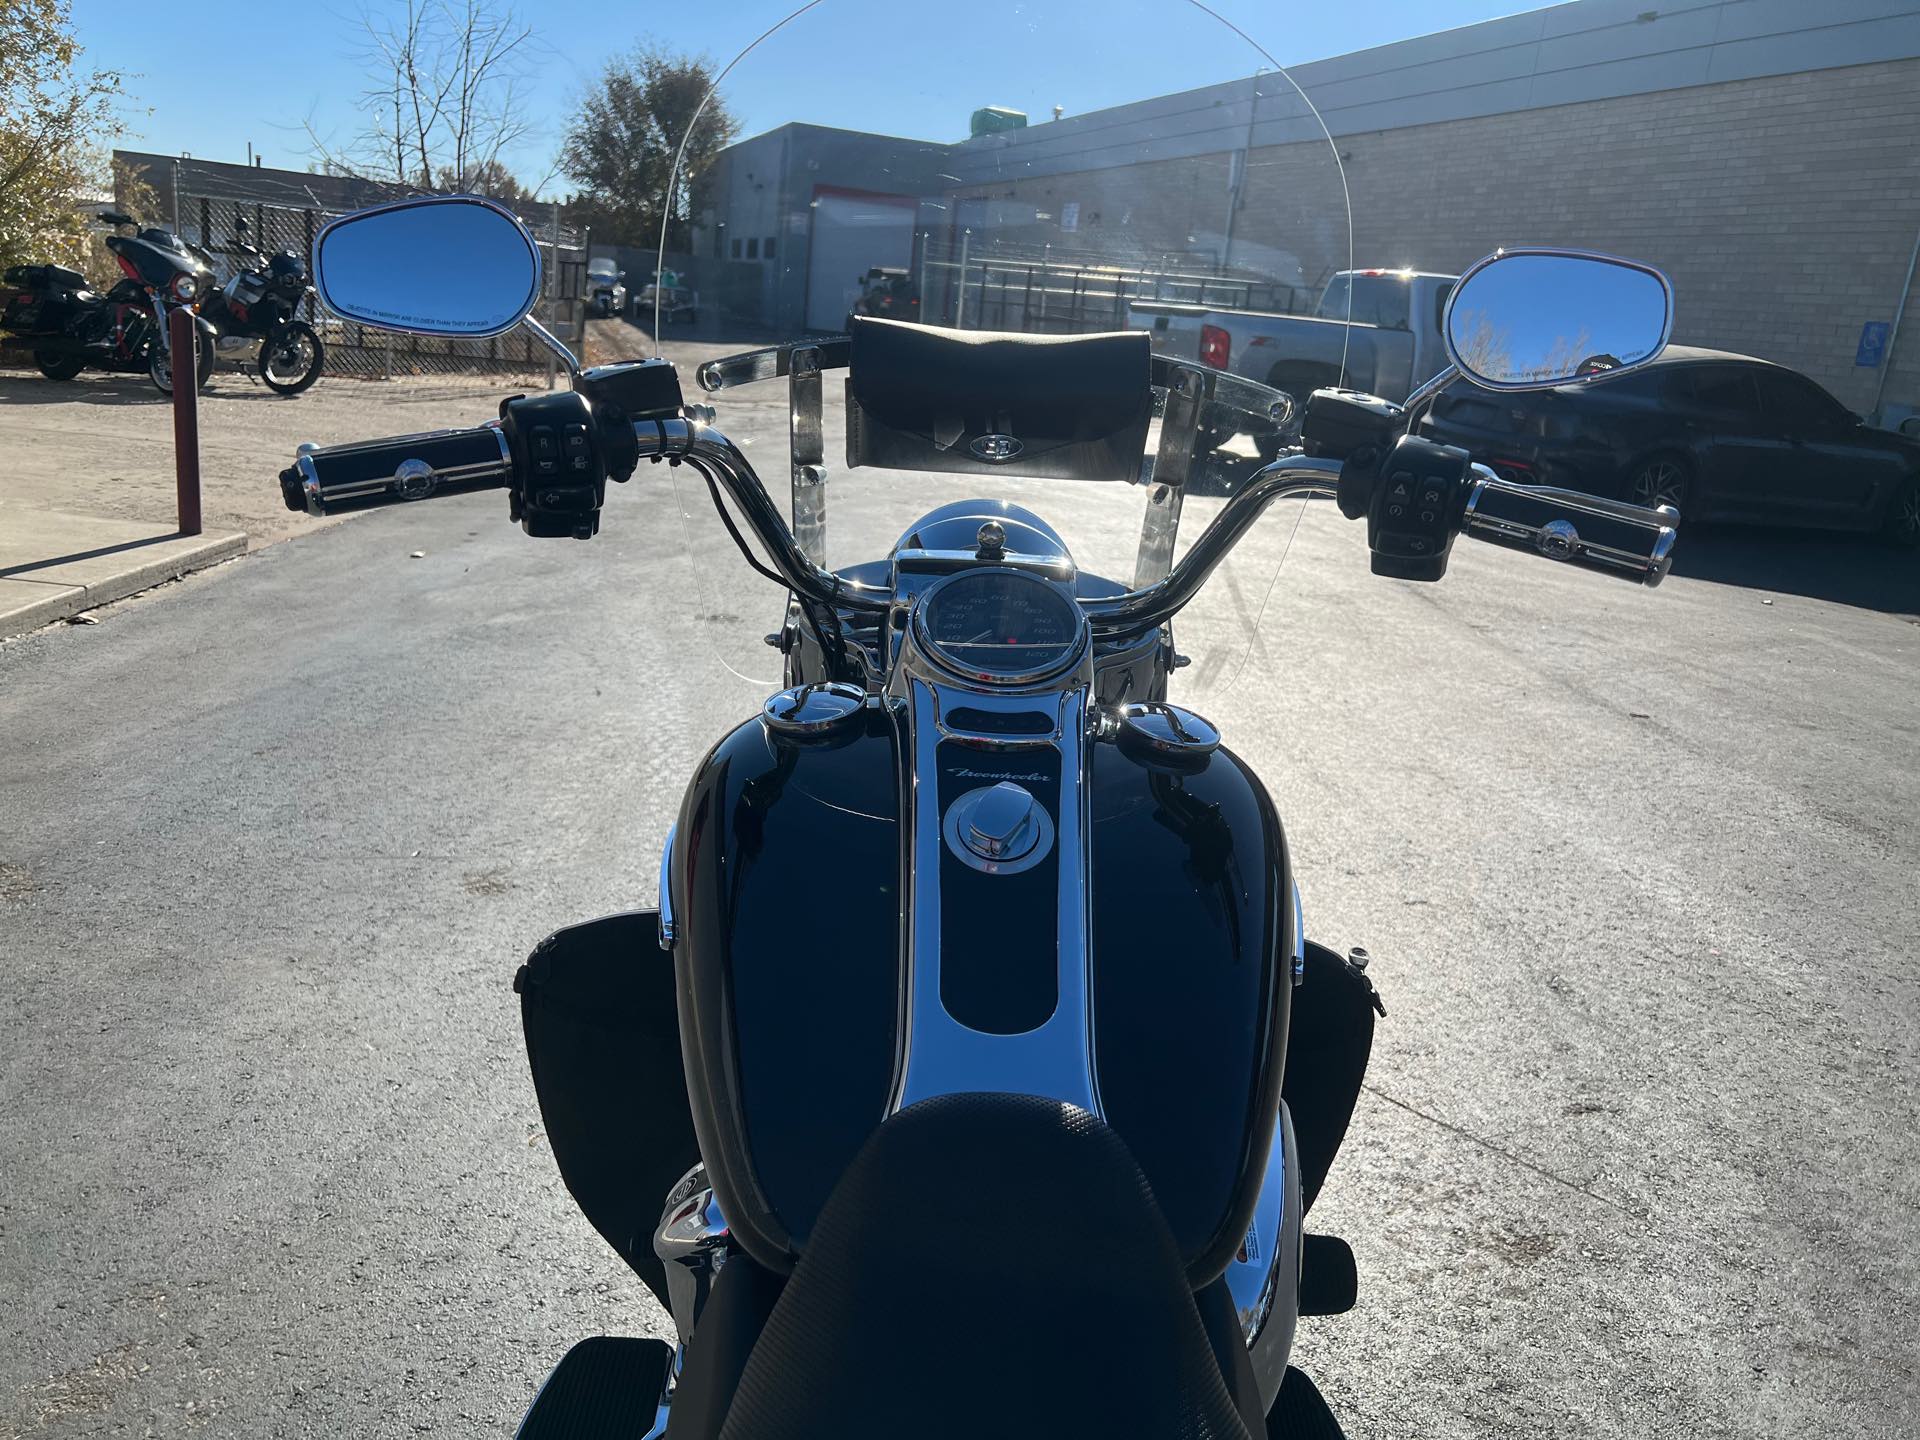 2018 Harley-Davidson Trike Freewheeler at Aces Motorcycles - Fort Collins